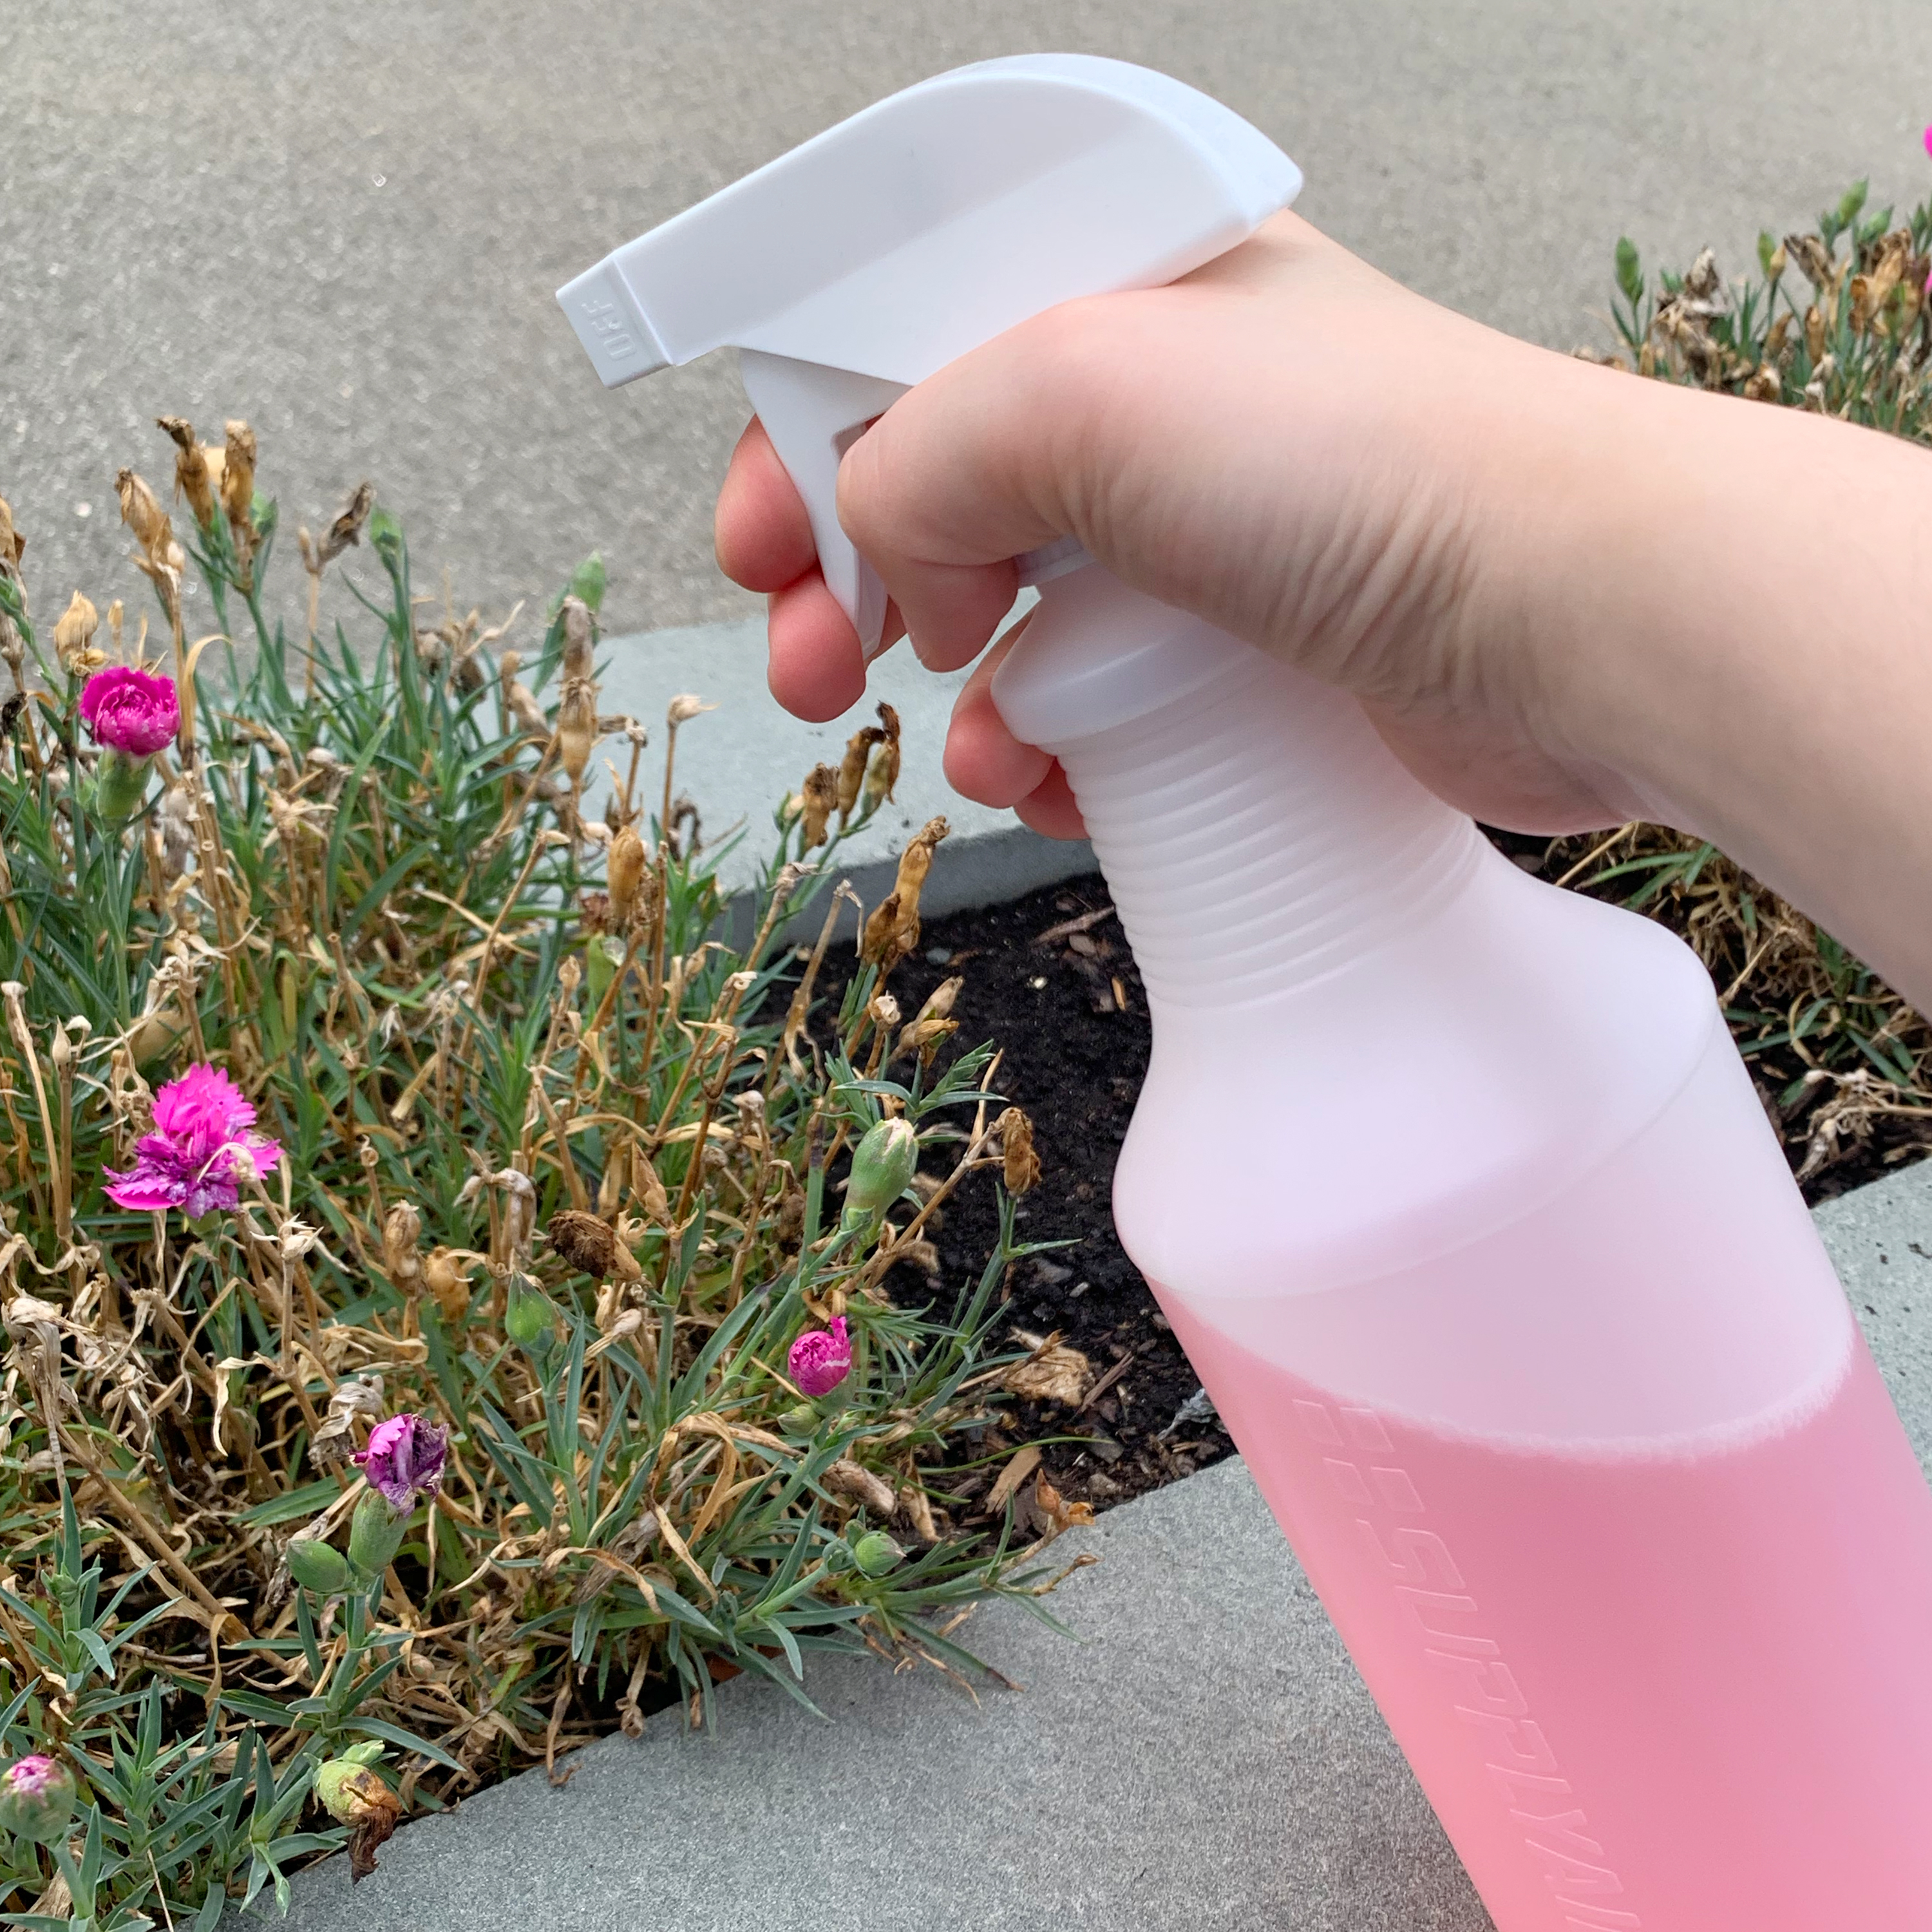 SUPPLYAID 32 oz. All-Purpose Leak-Proof Plastic Spray Bottles with